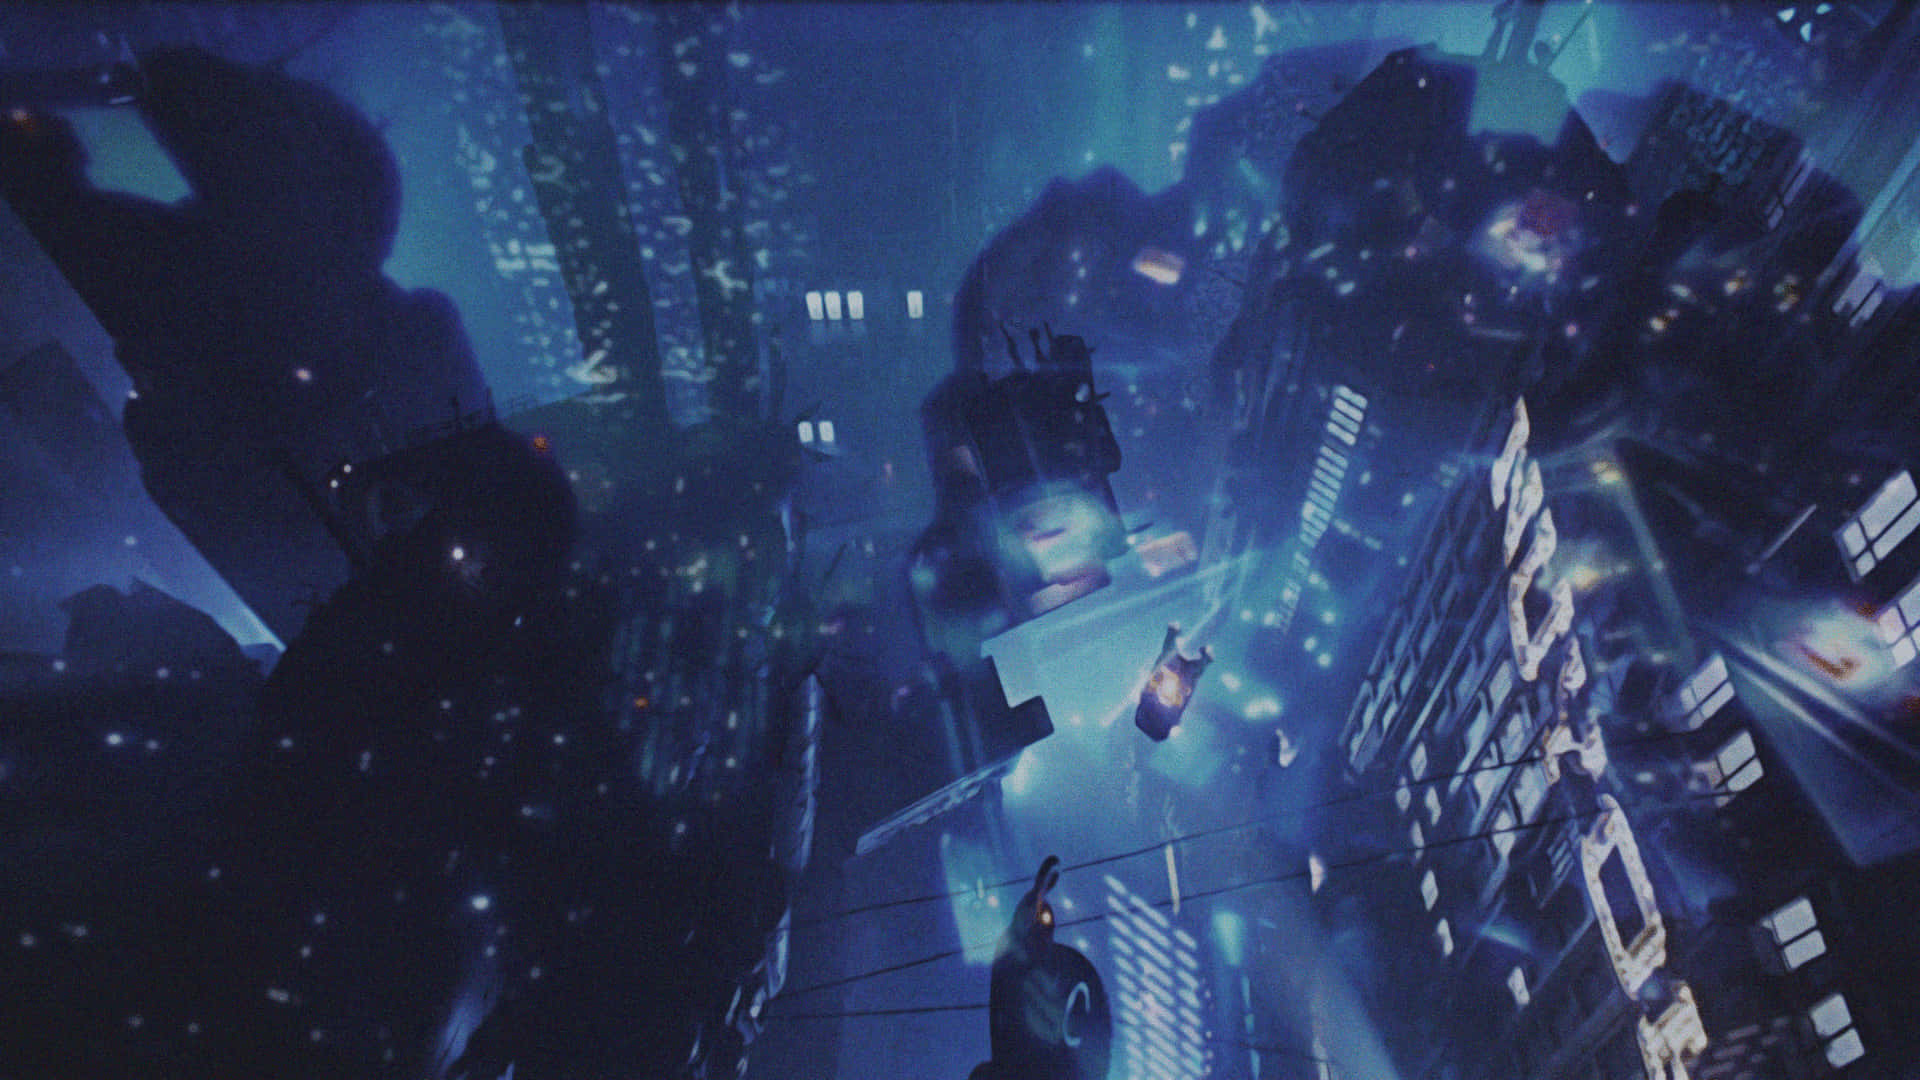 Sci-fi adventure awaits in the neon lit world of Blade Runner